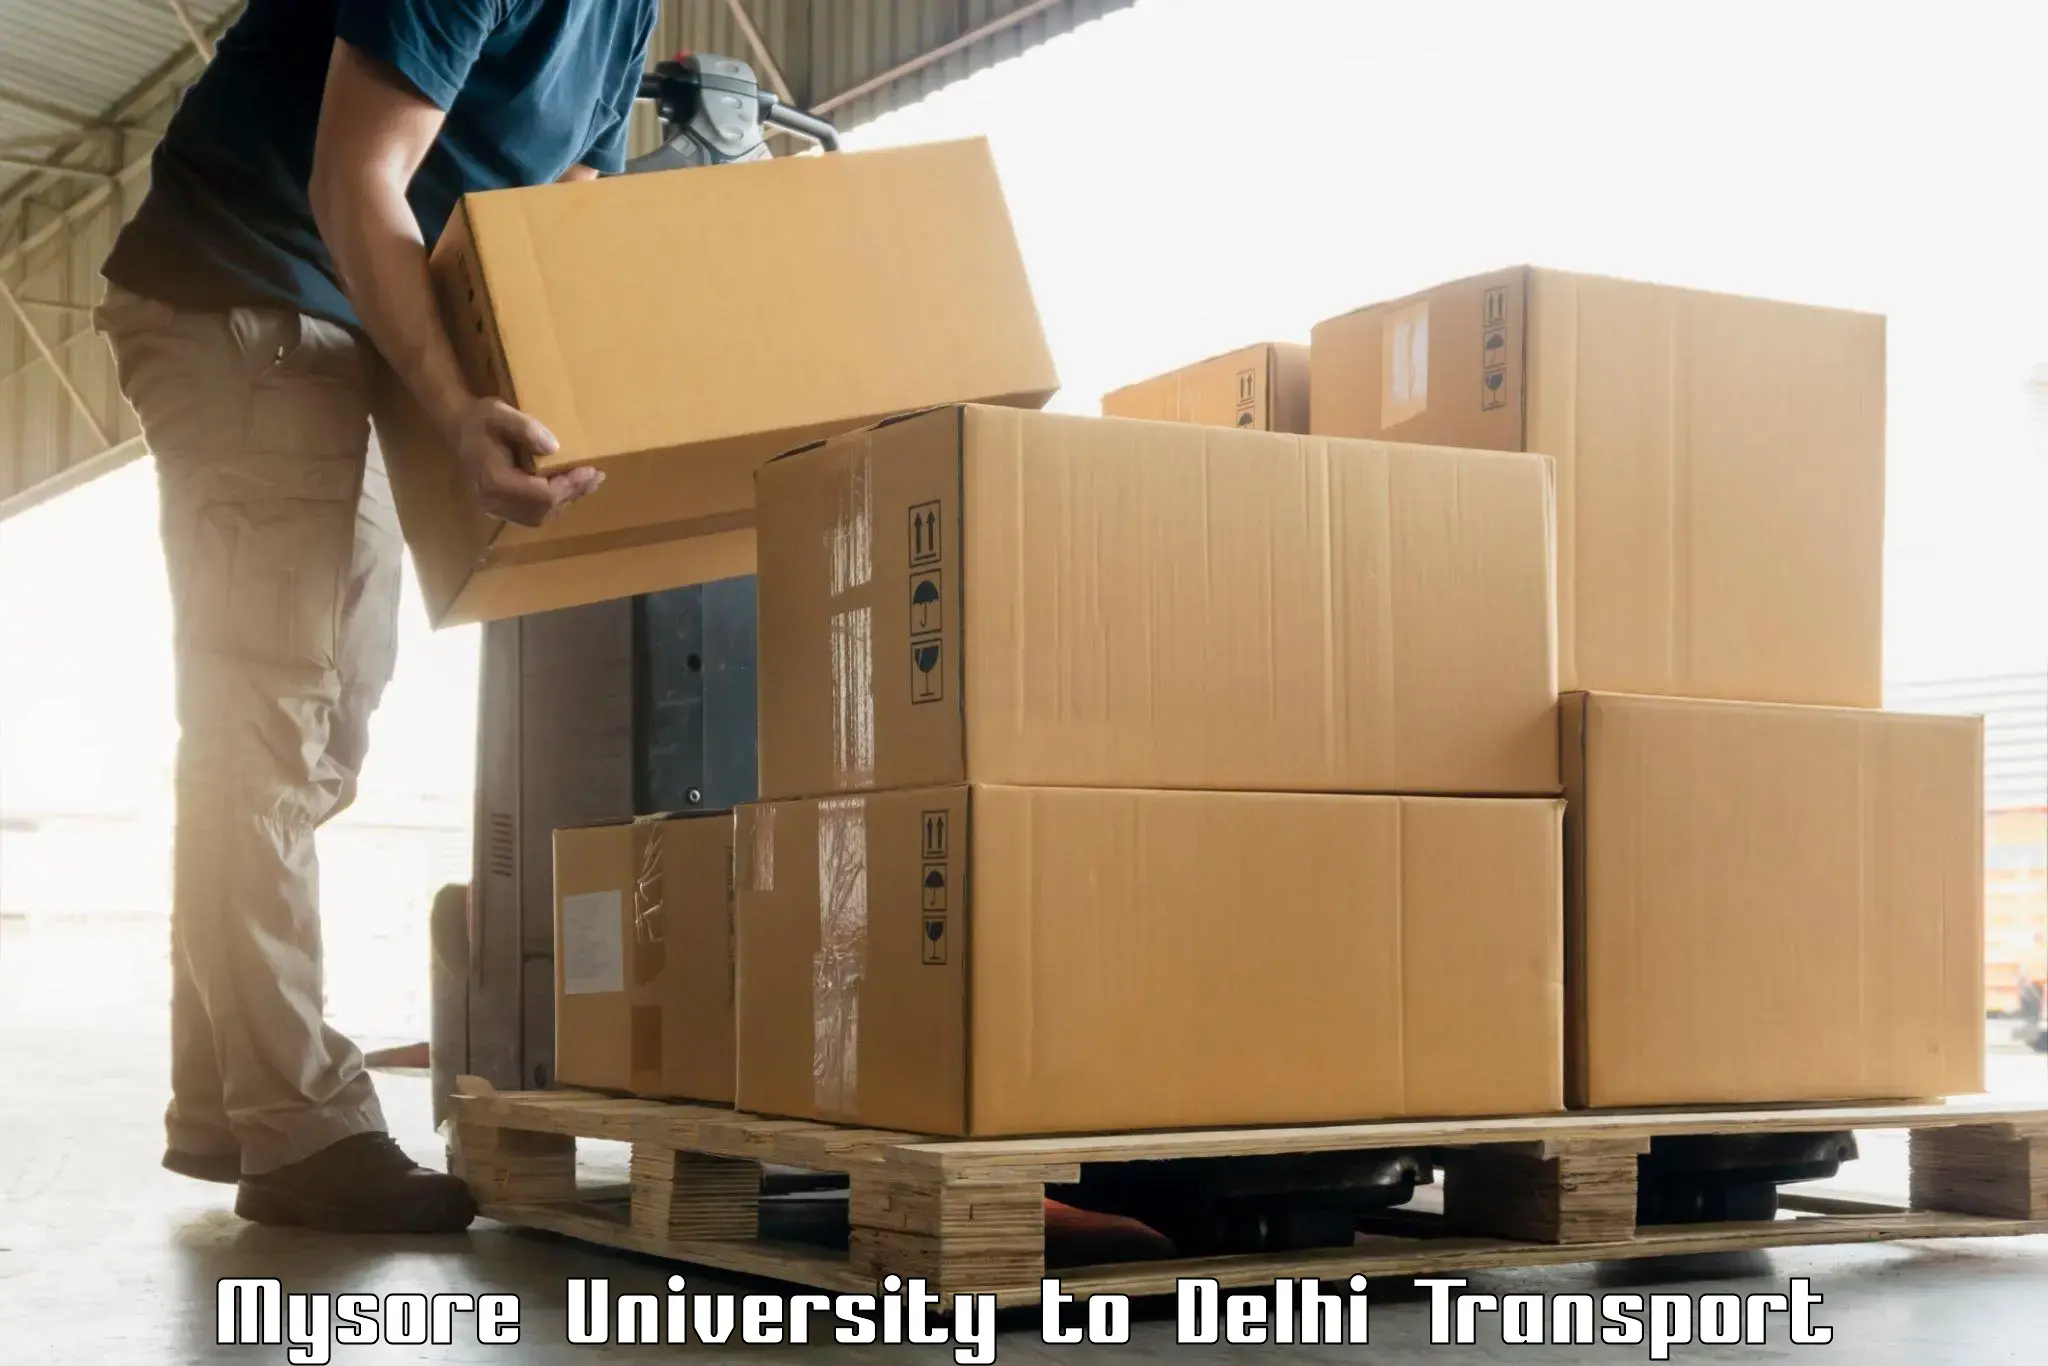 All India transport service Mysore University to NCR